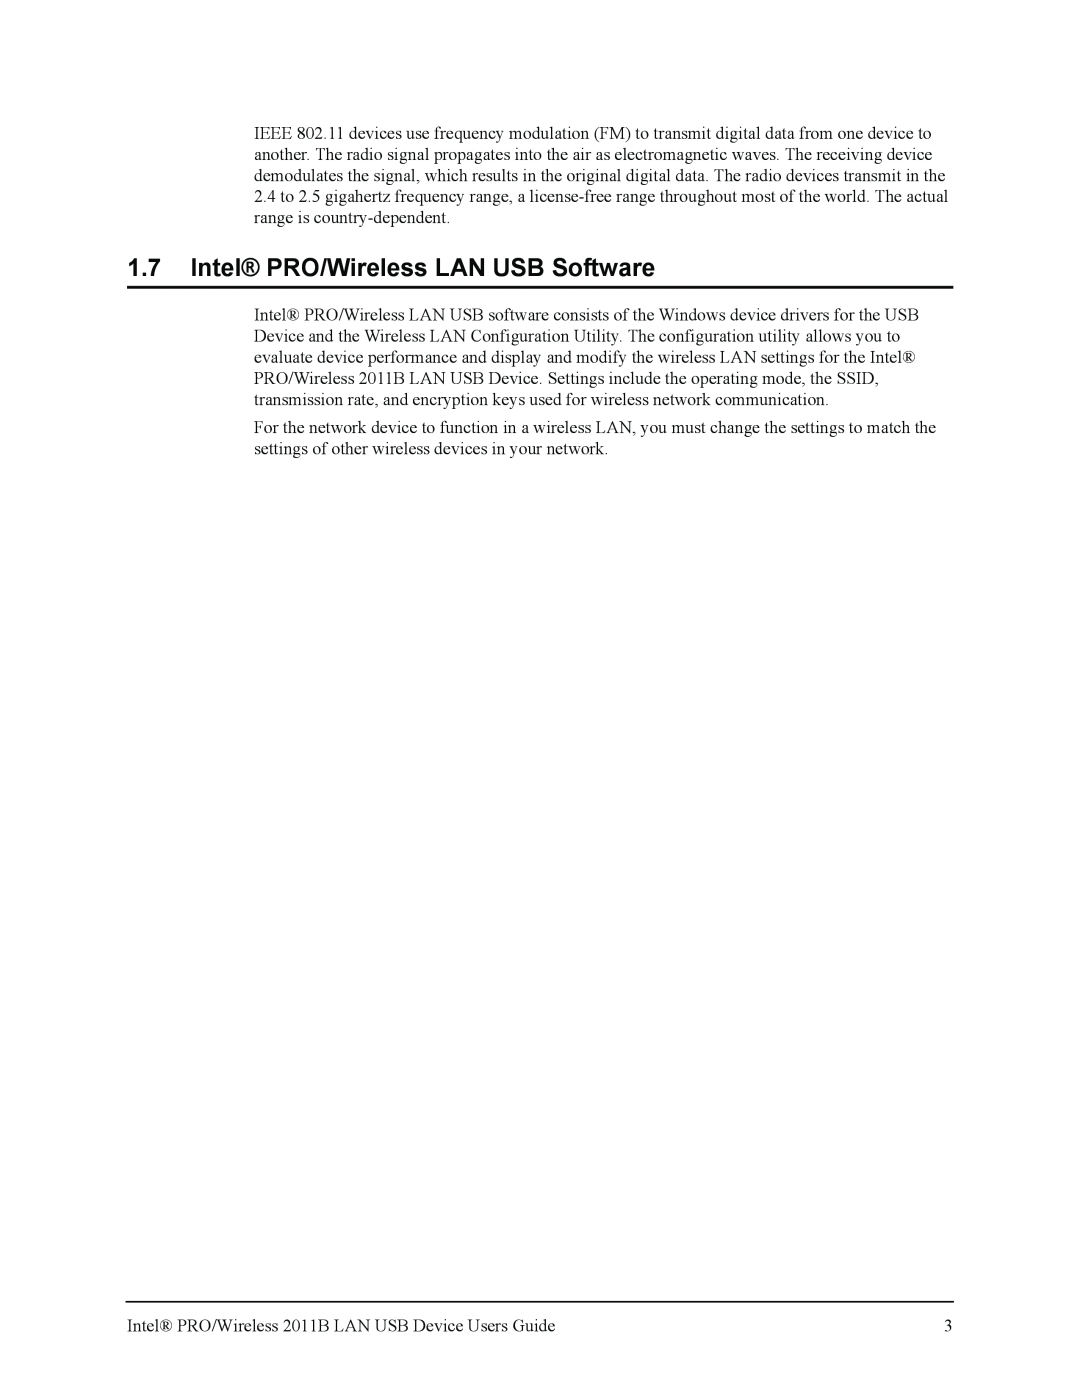 Intel 2011B manual 1.7Intel PRO/Wireless LAN USB Software 